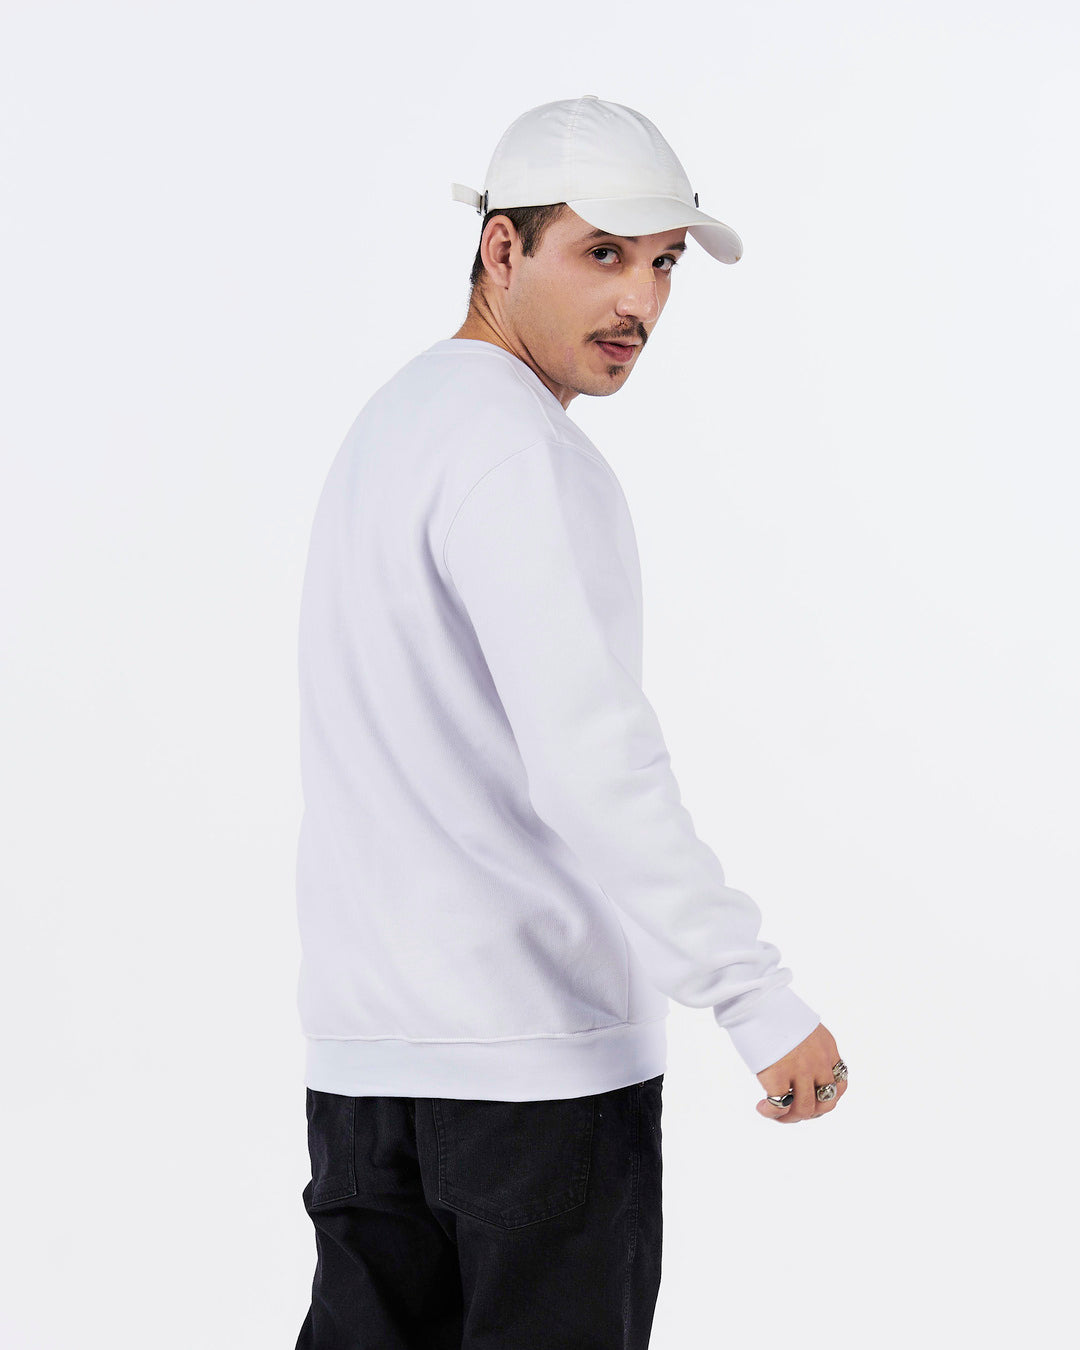 Sweatshirt - Solid White